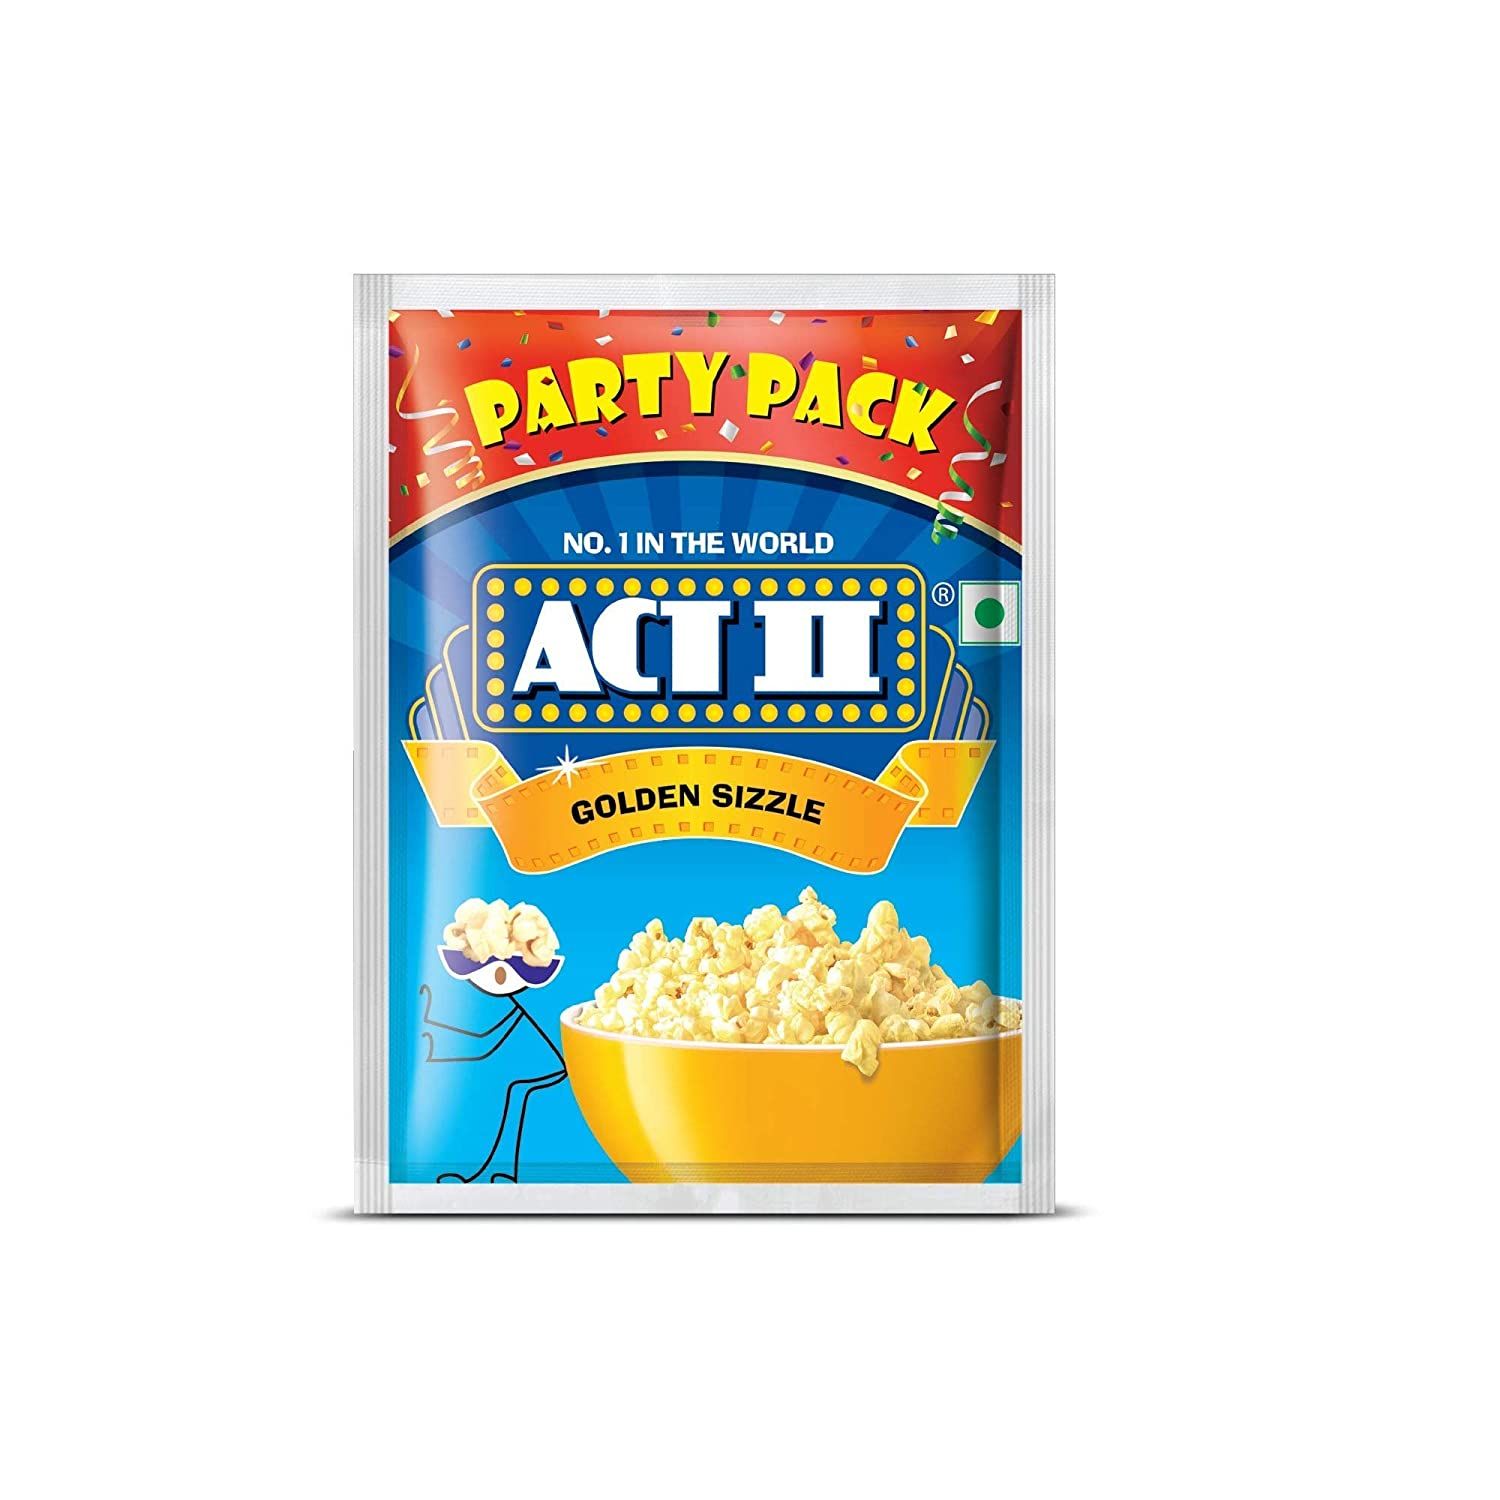 Act II Instant Popcorn Golden Sizzle Image